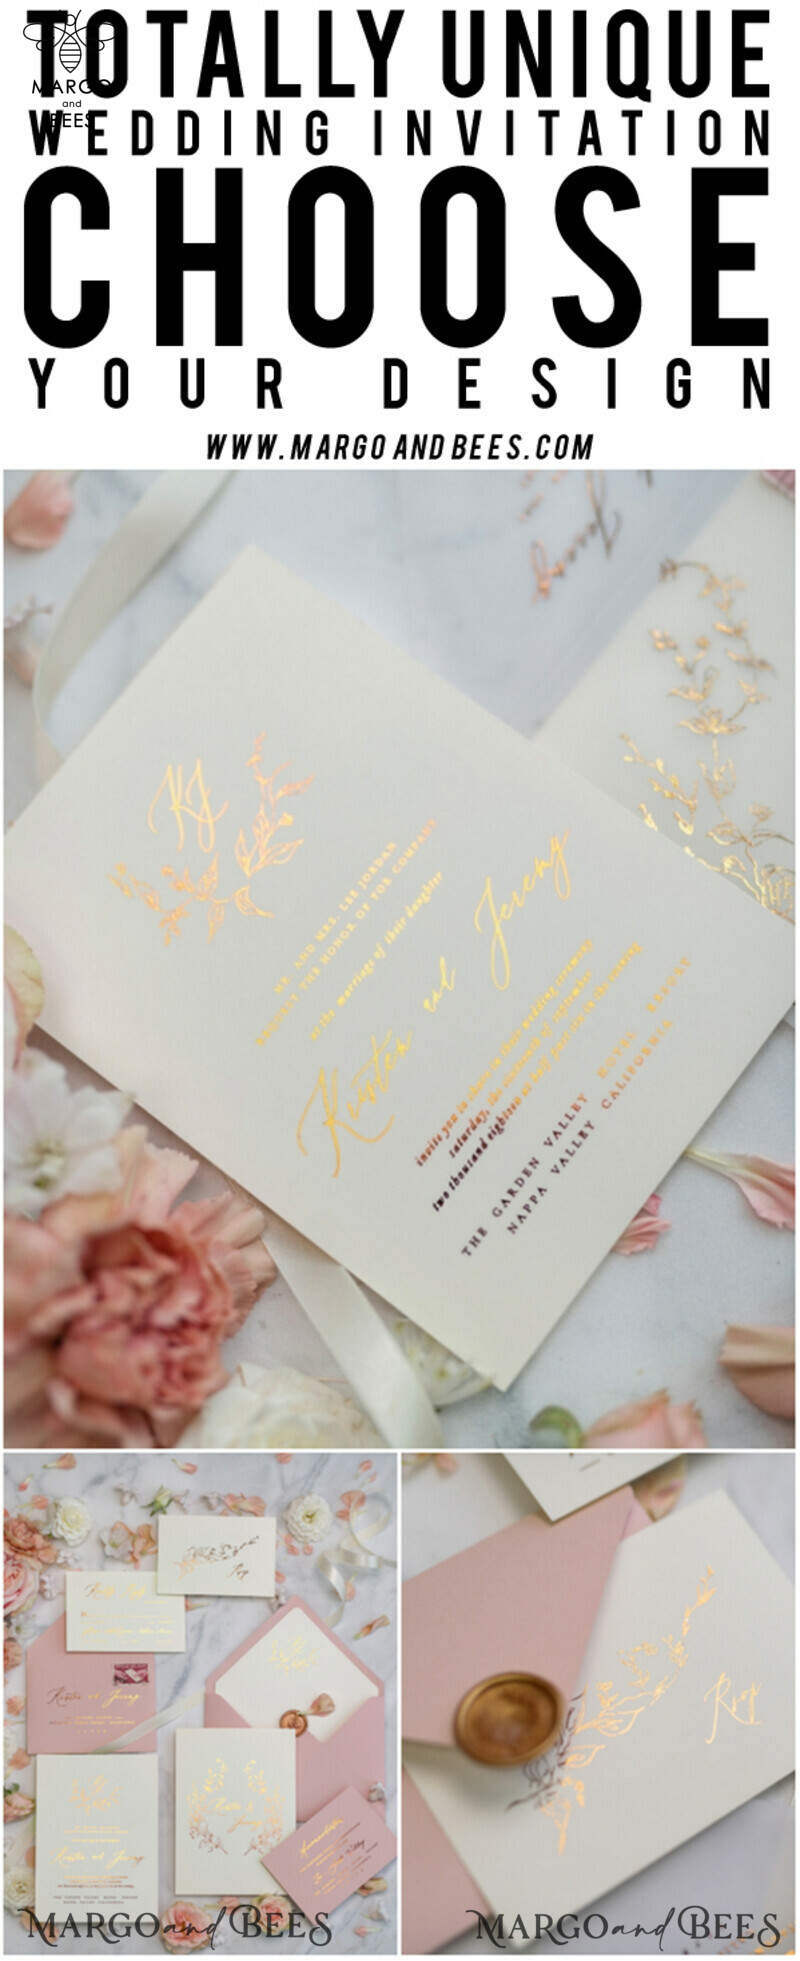 Bespoke Vellum Wedding Invitation Suite: Romantic Blush Pink and Glamour Gold Foil for Elegant Golden Wedding Invites-43